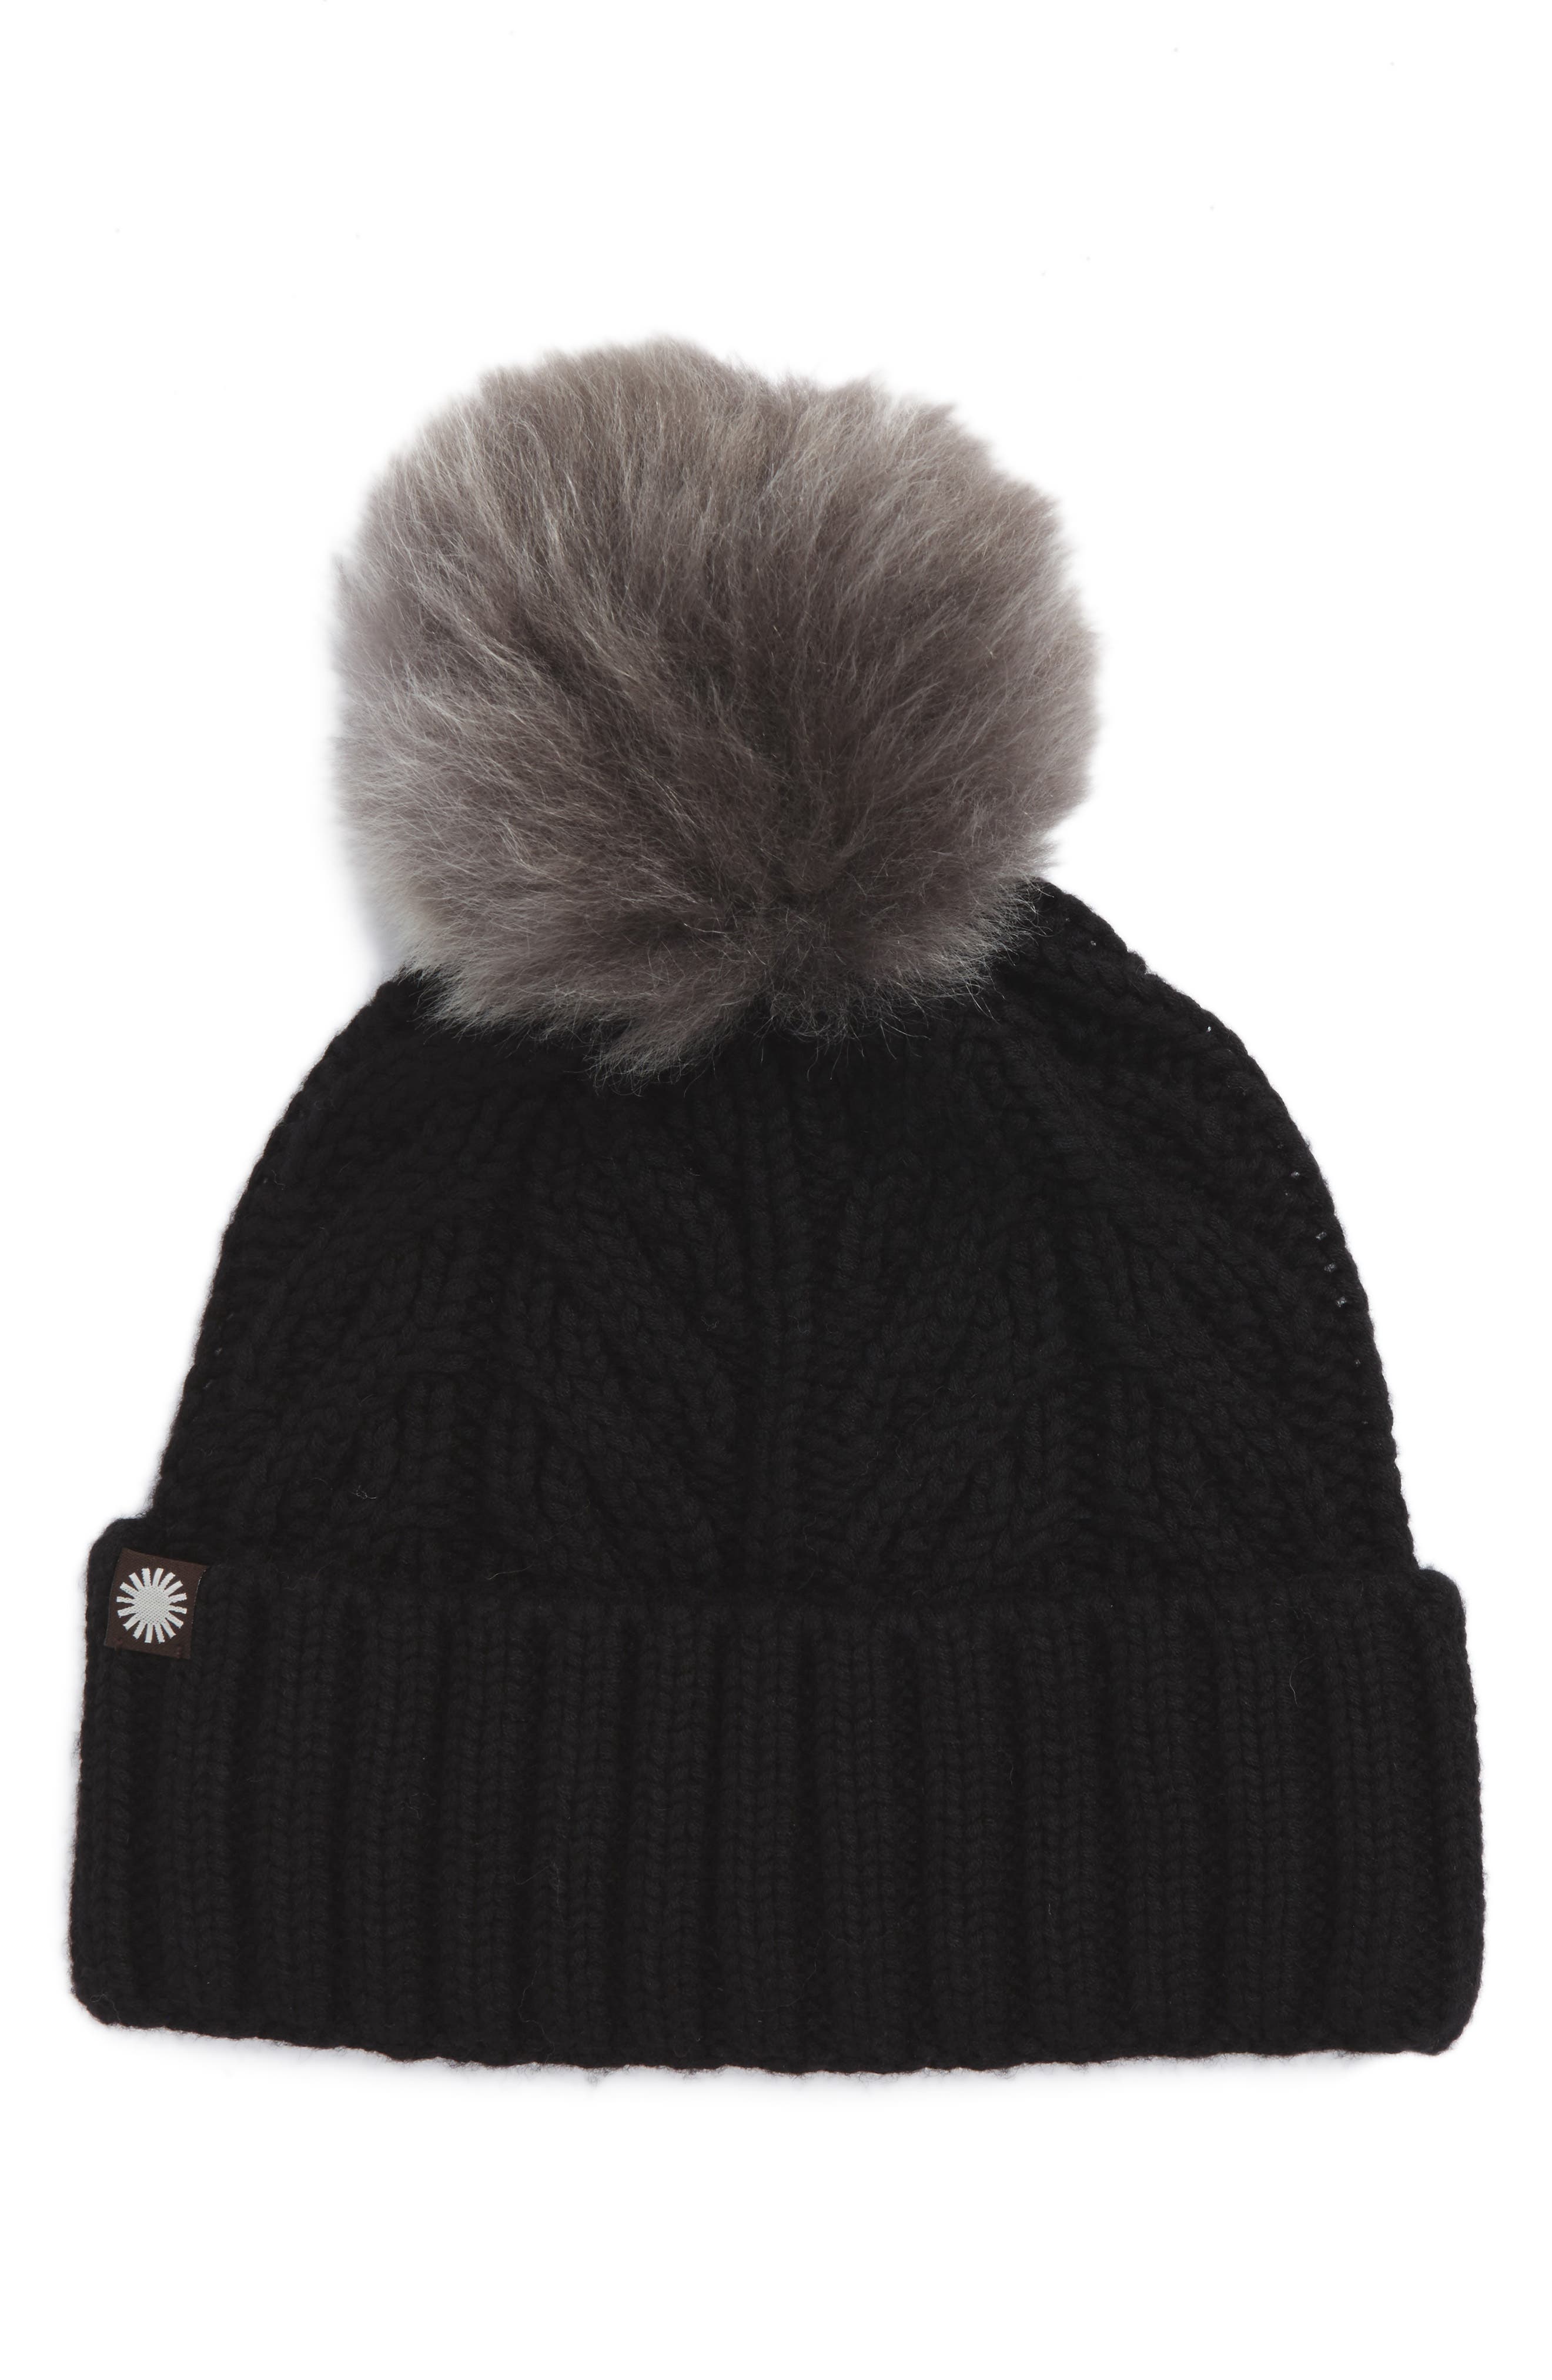 ugg knit hat